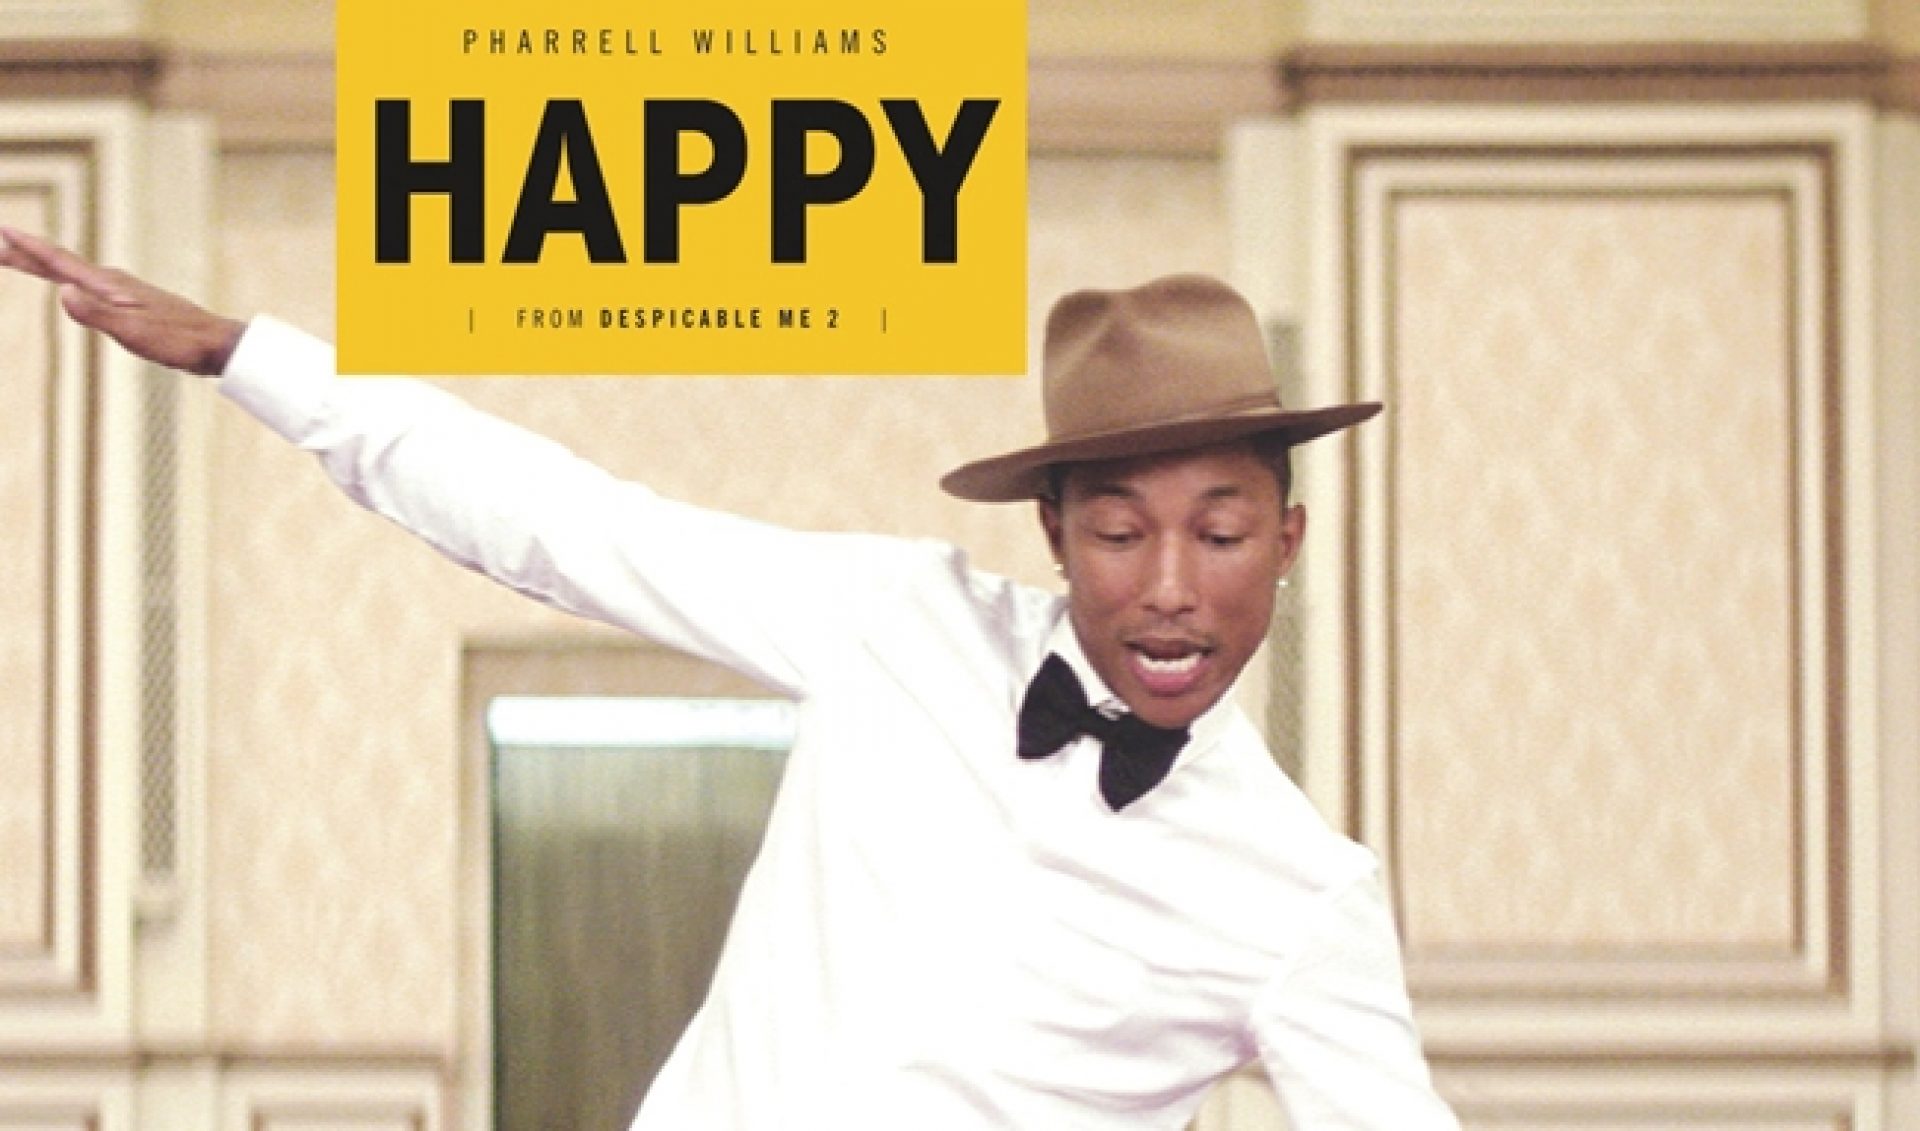 Happy williams текст. Фаррелл Уильямс Хэппи. Pharrell Williams Happy обложка. Pharrell Williams фото Happy. Happy Pharrell Williams Despicable me 2.